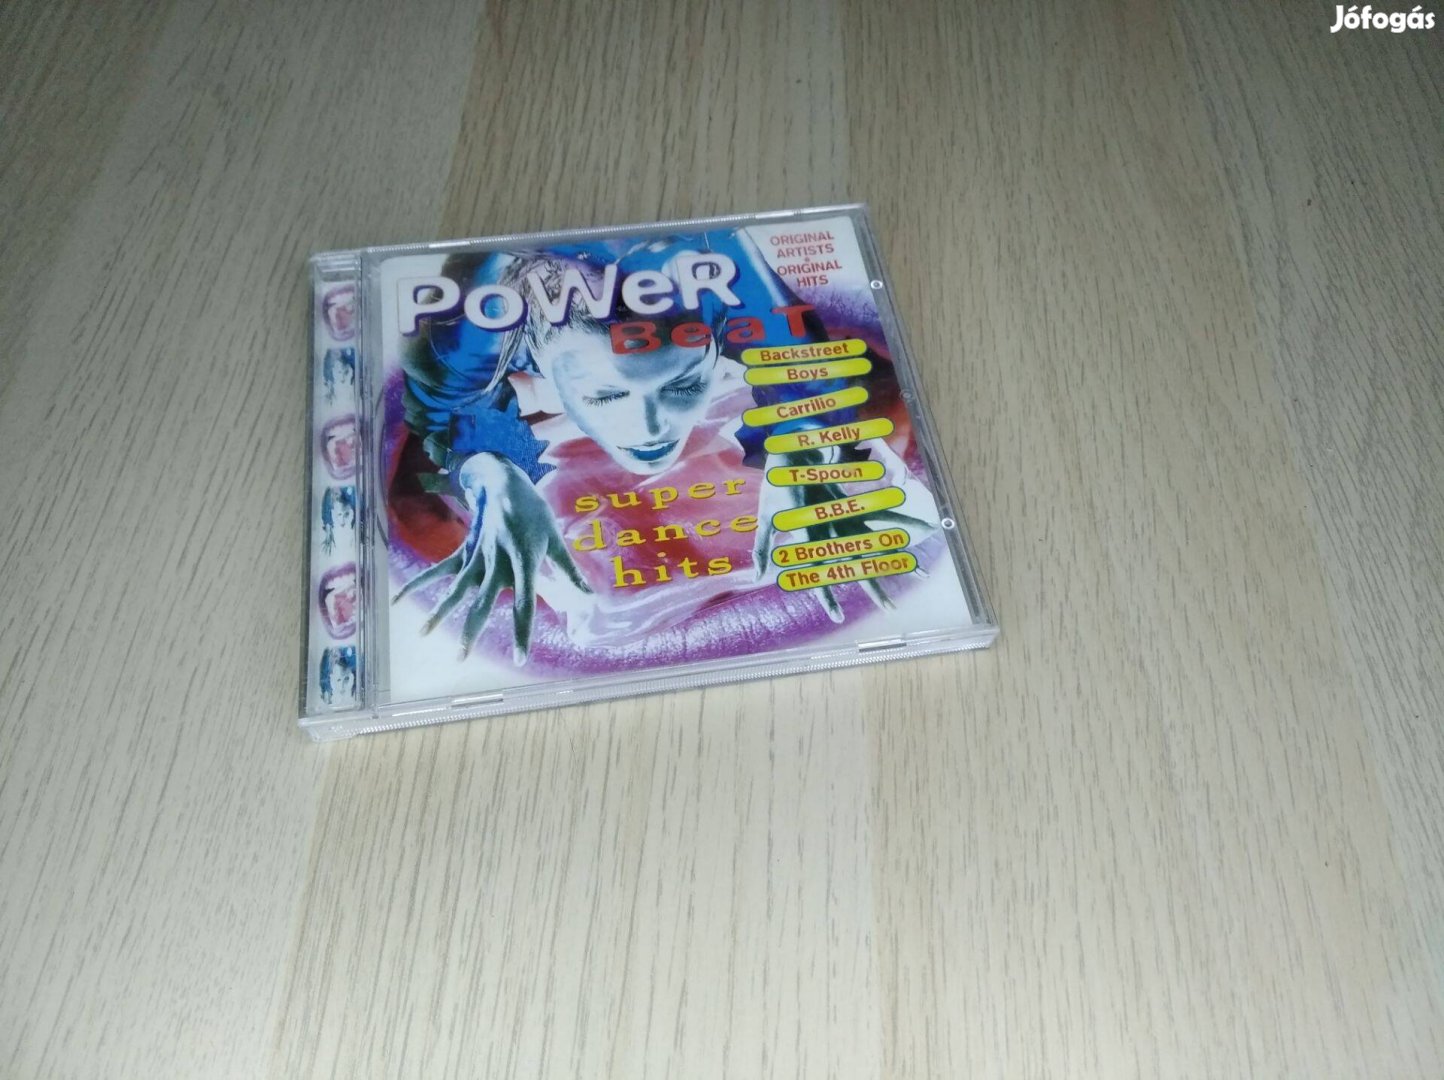 Power Beat: Super Dance Hits / CD 1997